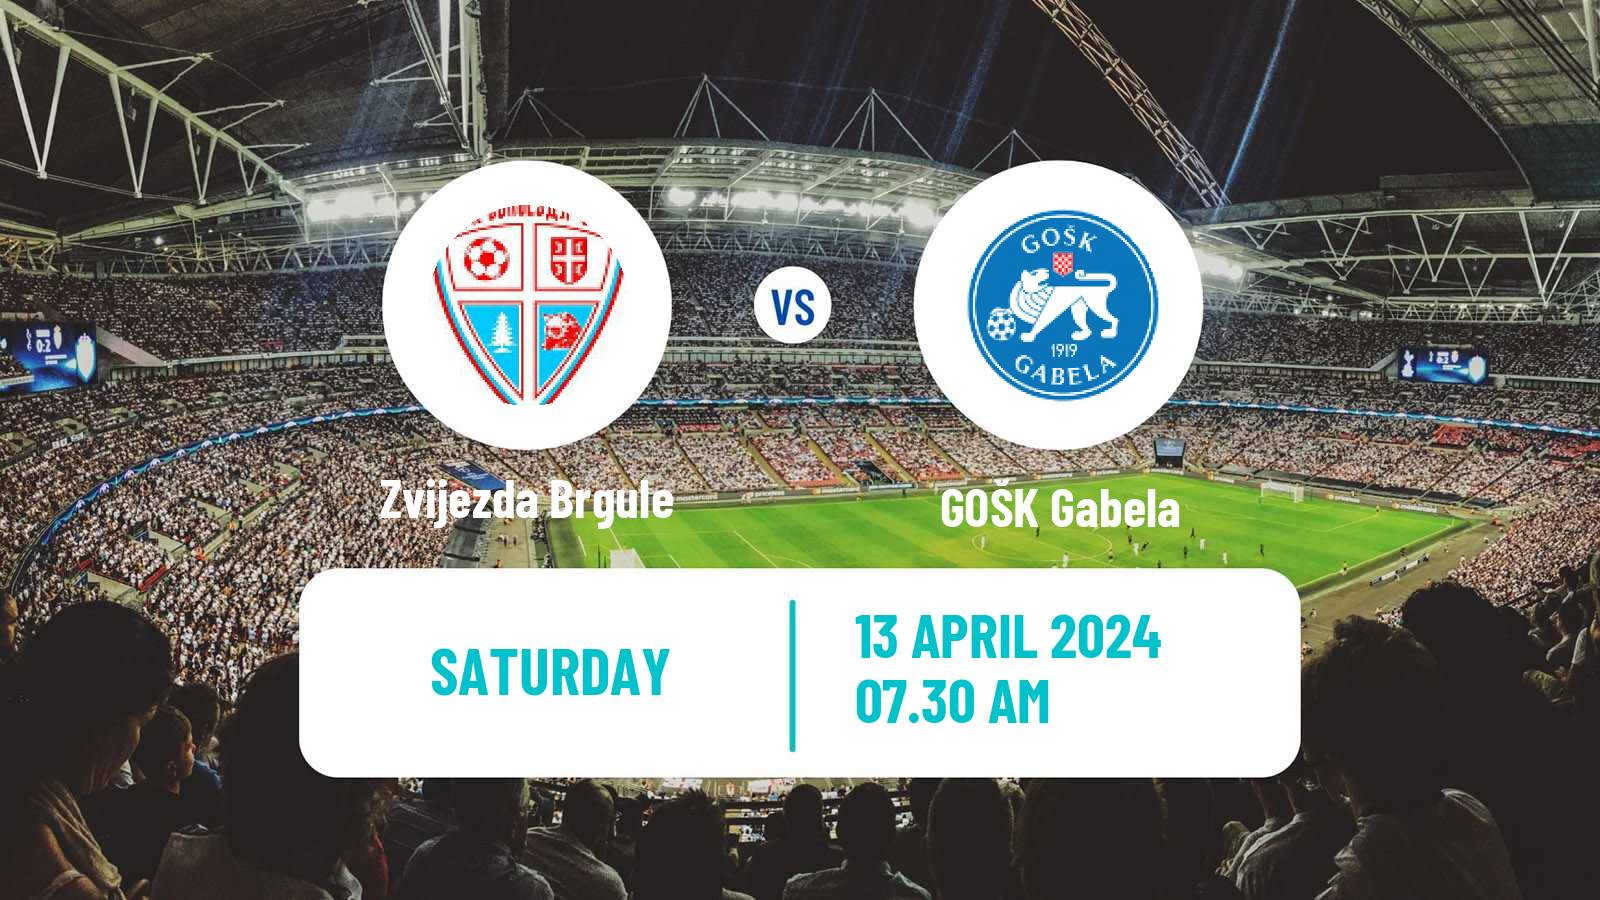 Soccer Bosnian Premier League Zvijezda Brgule - GOŠK Gabela